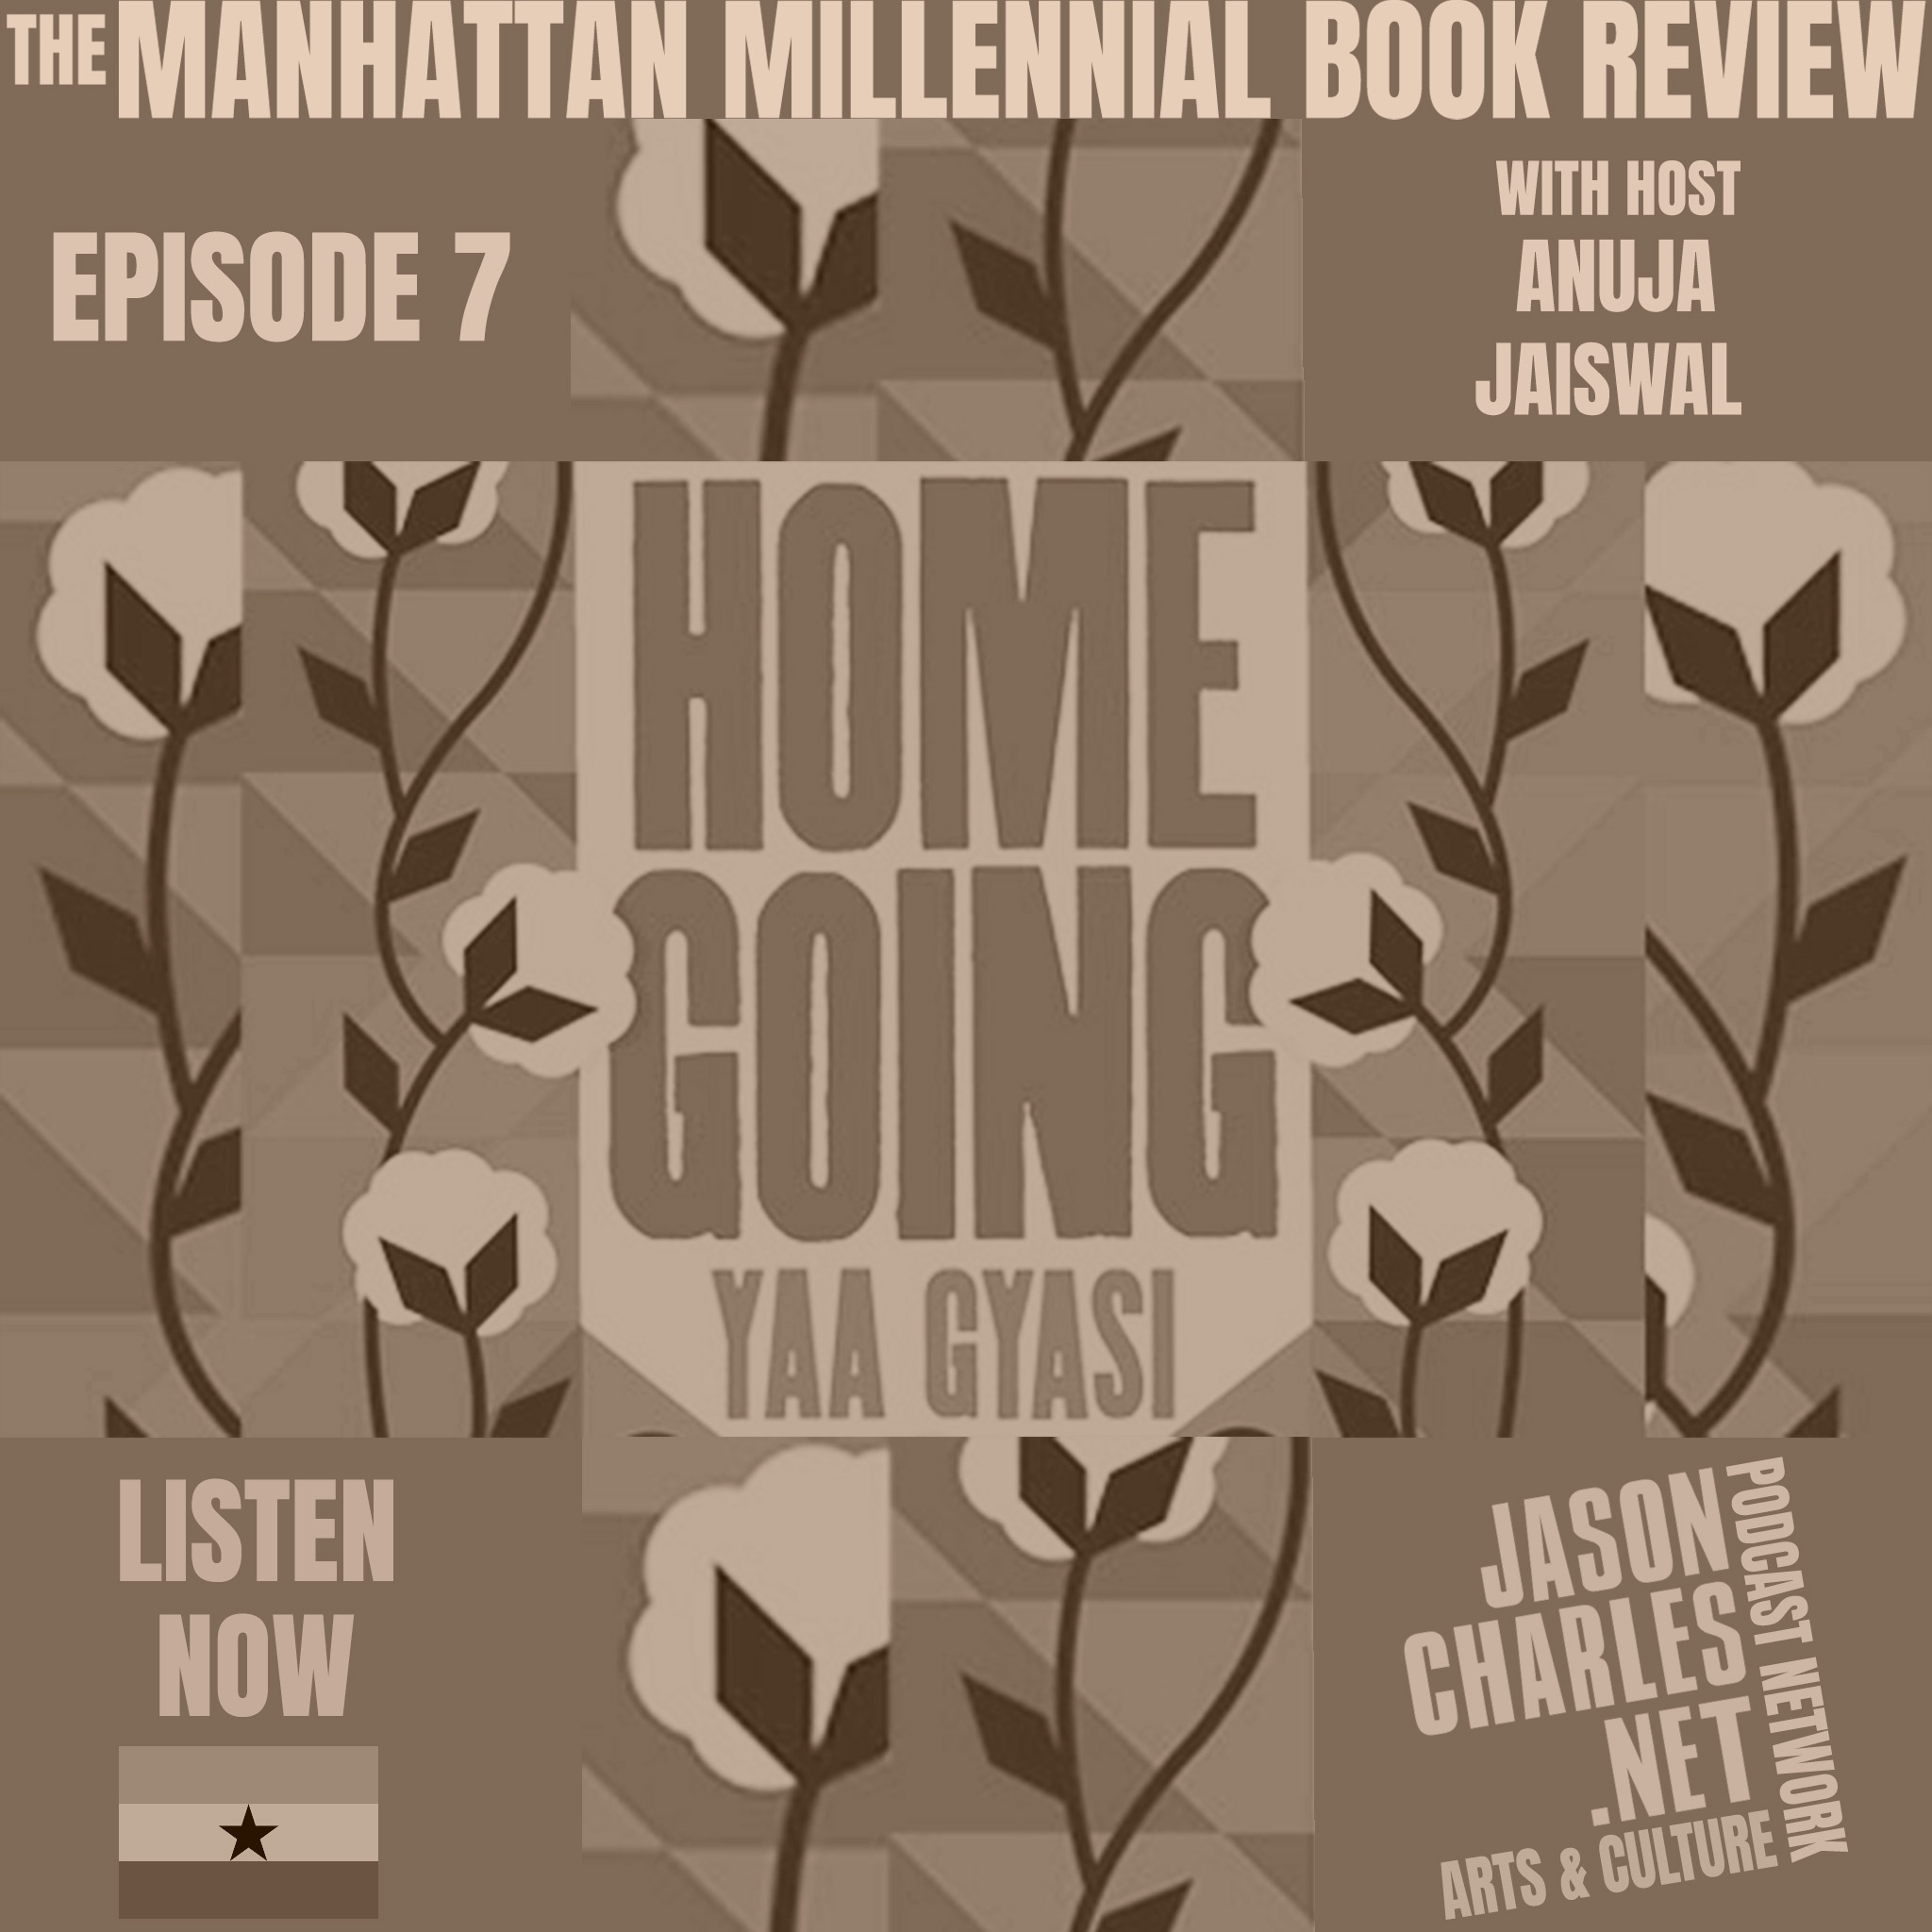 THE MANHATTAN MILLENNIAL BOOK REVIEW Episode 7 Homegoing by Yaa Gyasi